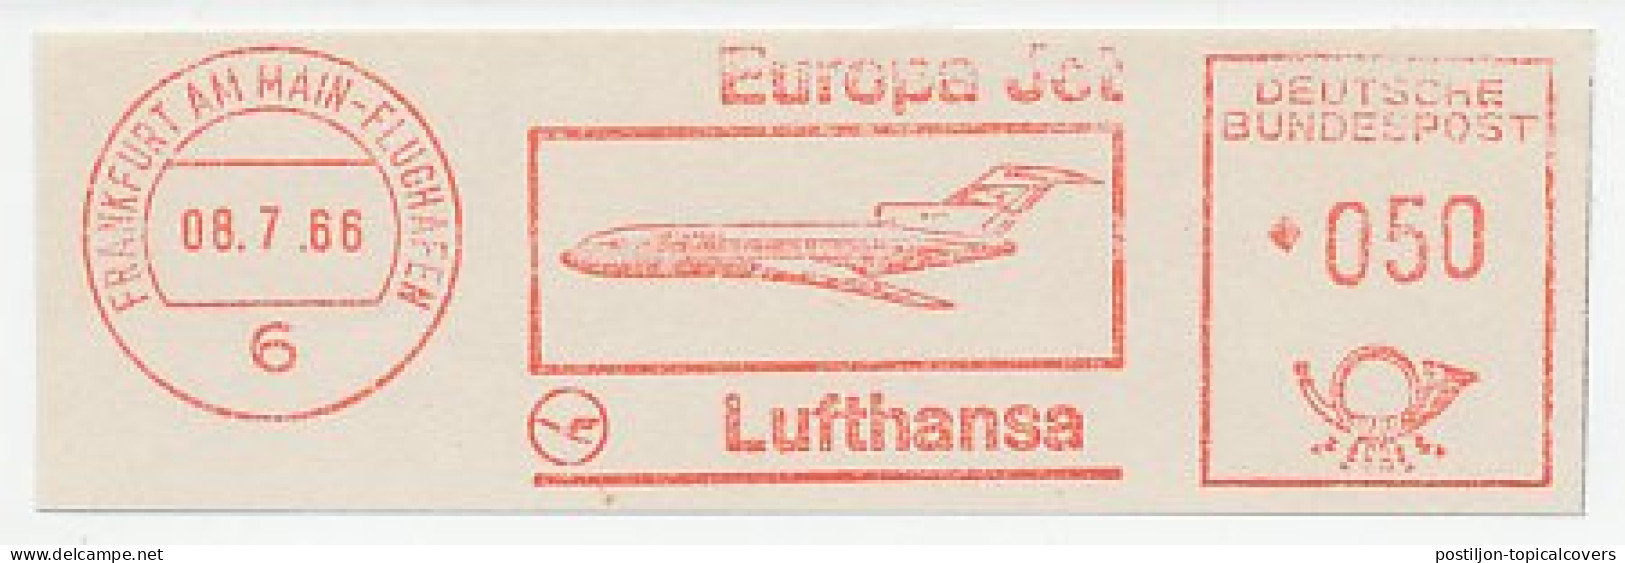 Meter Cut Germany 1966 Airline - Lufthansa - Europa Jet - Flugzeuge